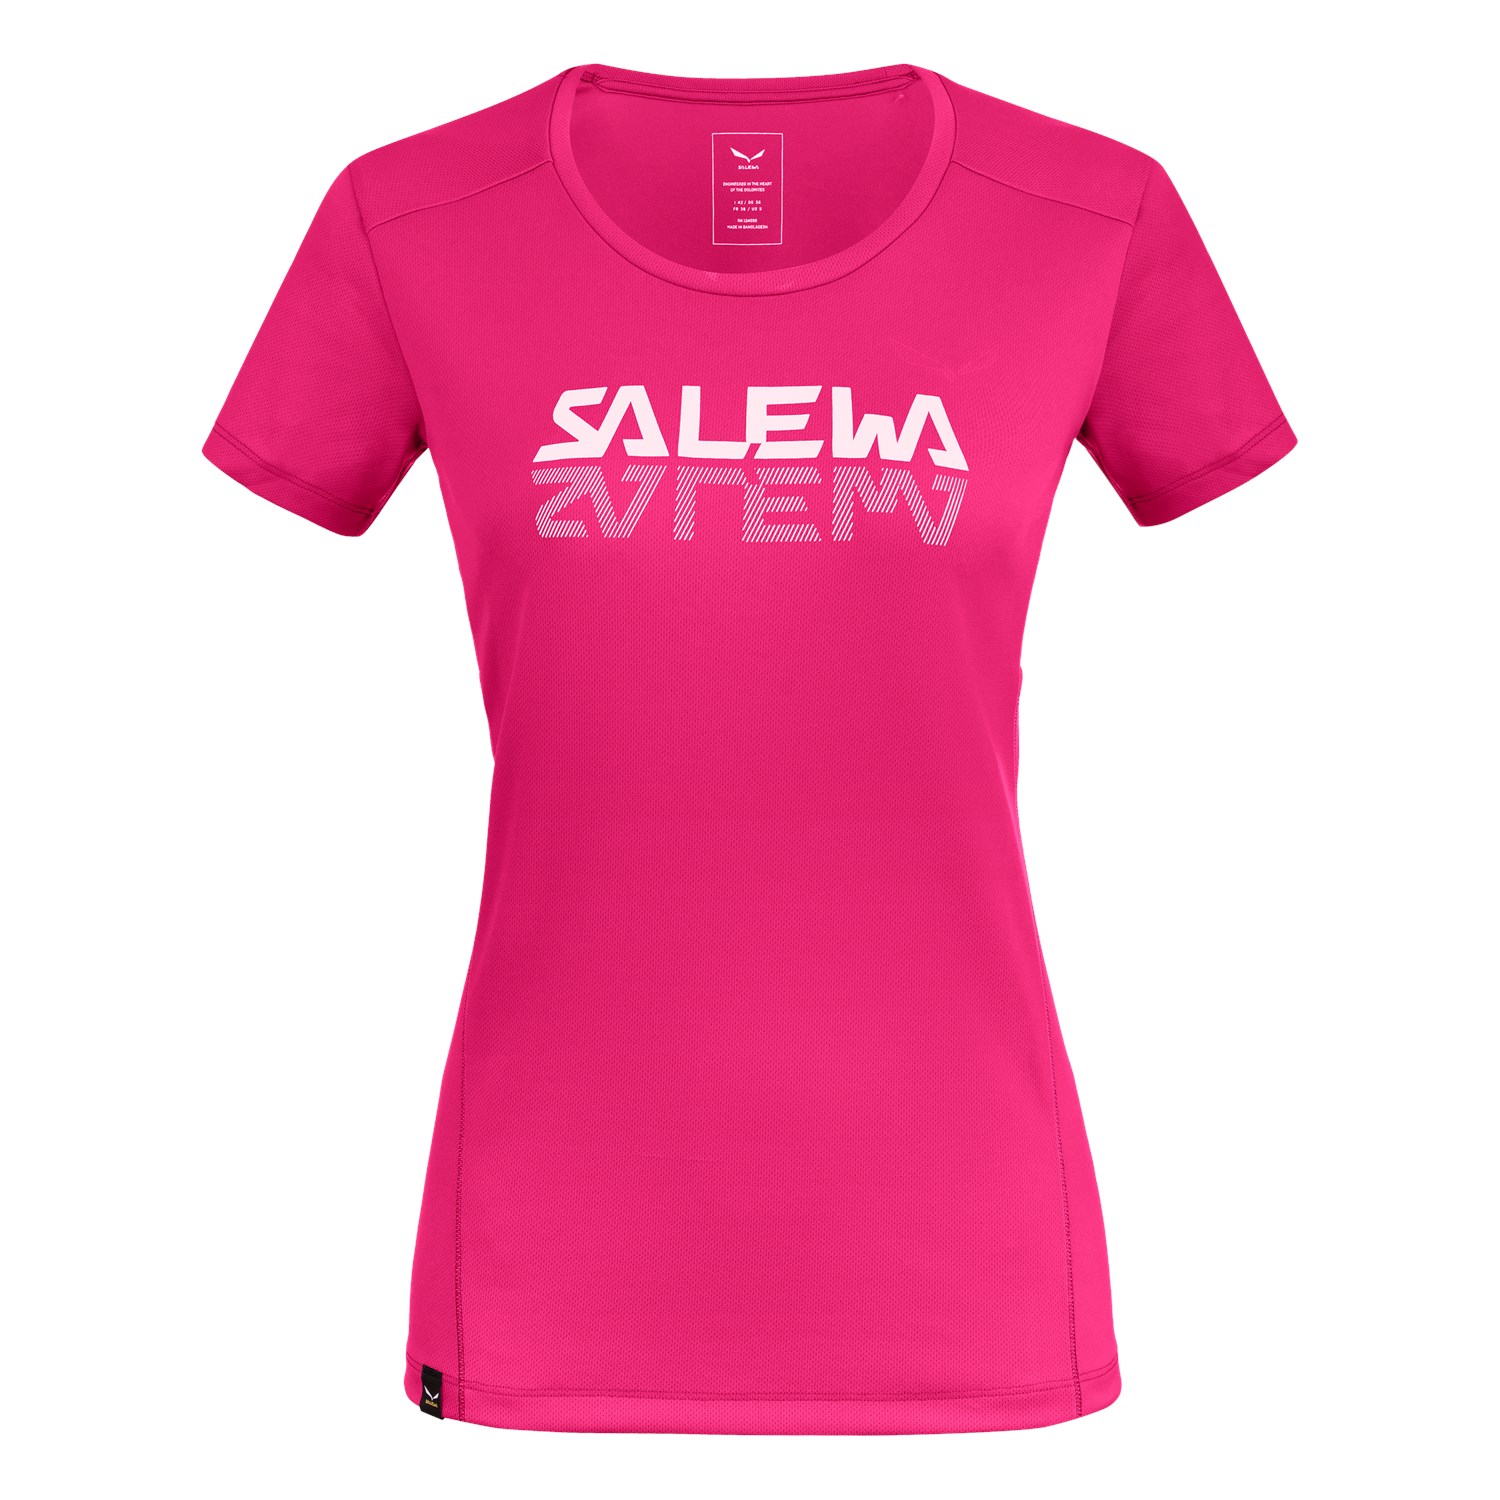 Salewa Sporty Graphic Dry Argentina - Camisetas Mujer - Rosas - GKJO-09718